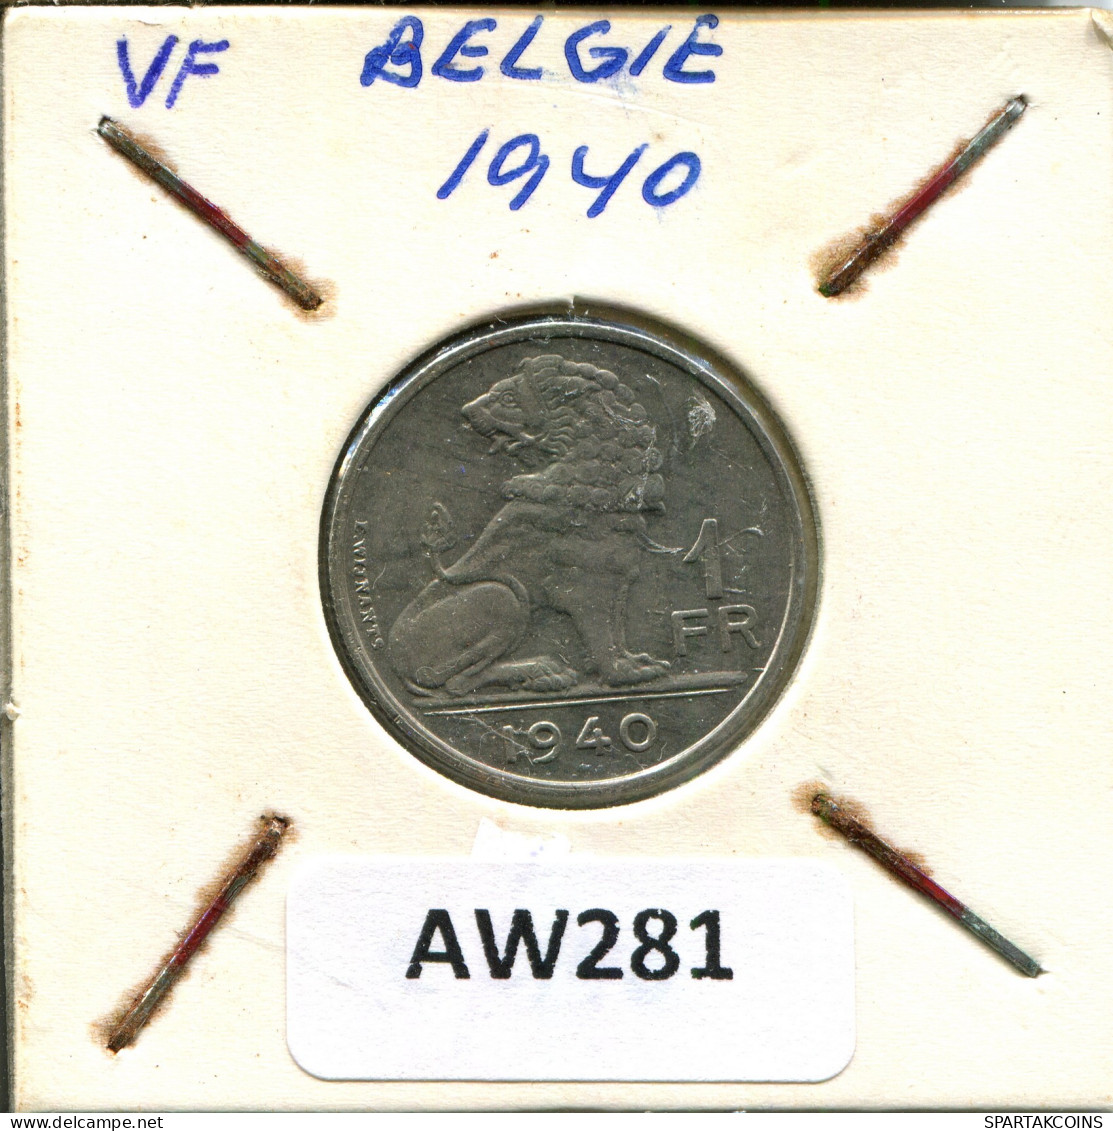 1 FRANC 1940 BELGIE-BELGIQUE BELGIUM Coin #AW281.U - 1 Franc